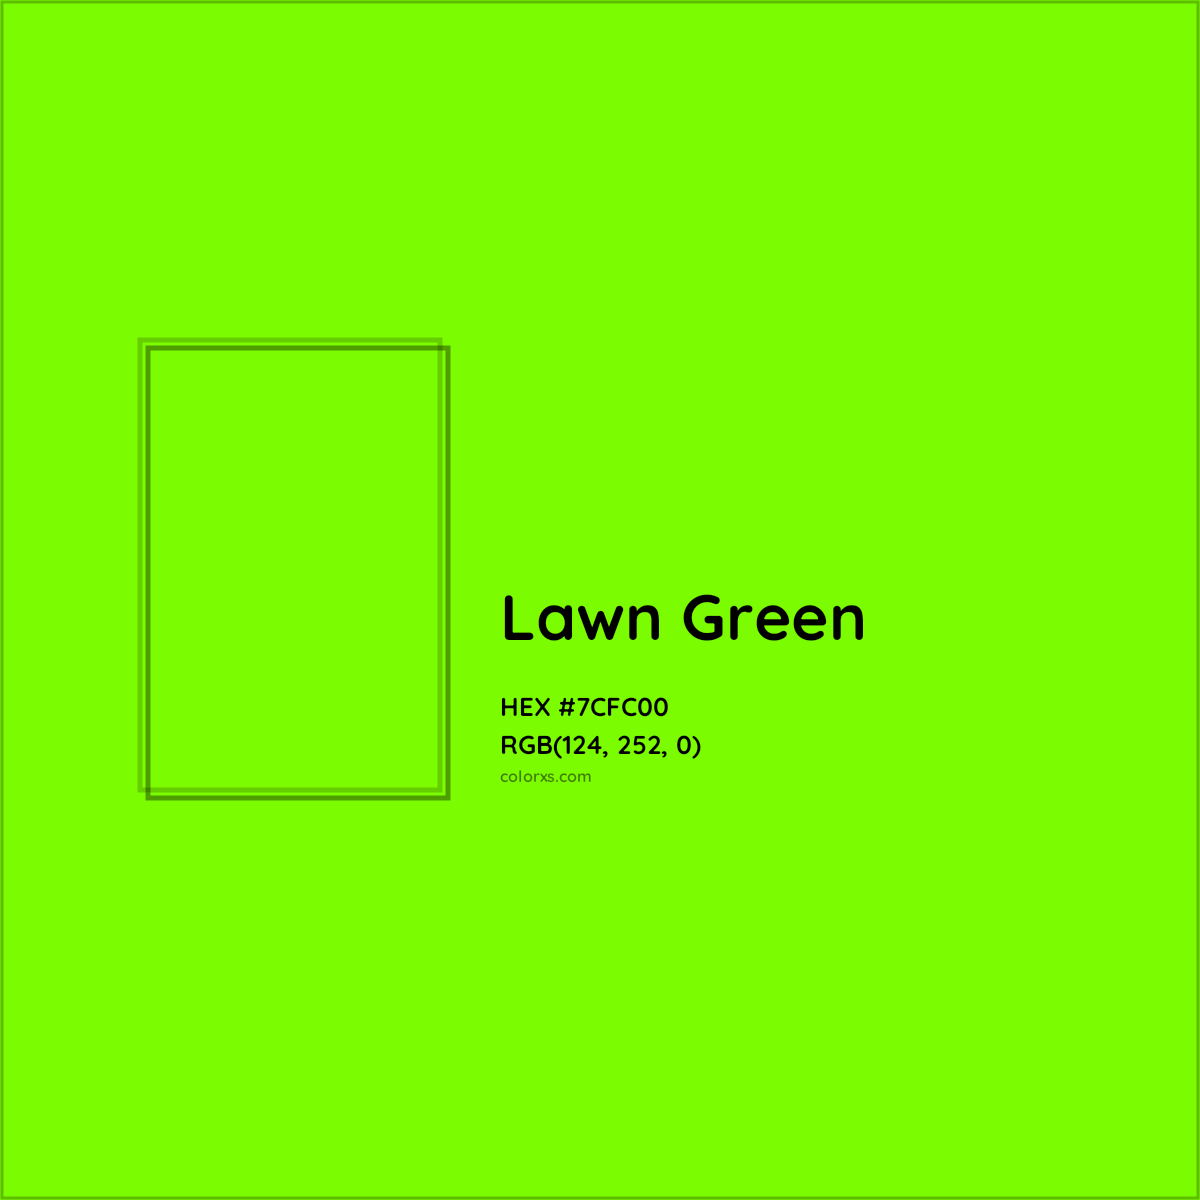 HEX #7CFC00 Lawn Green Color - Color Code